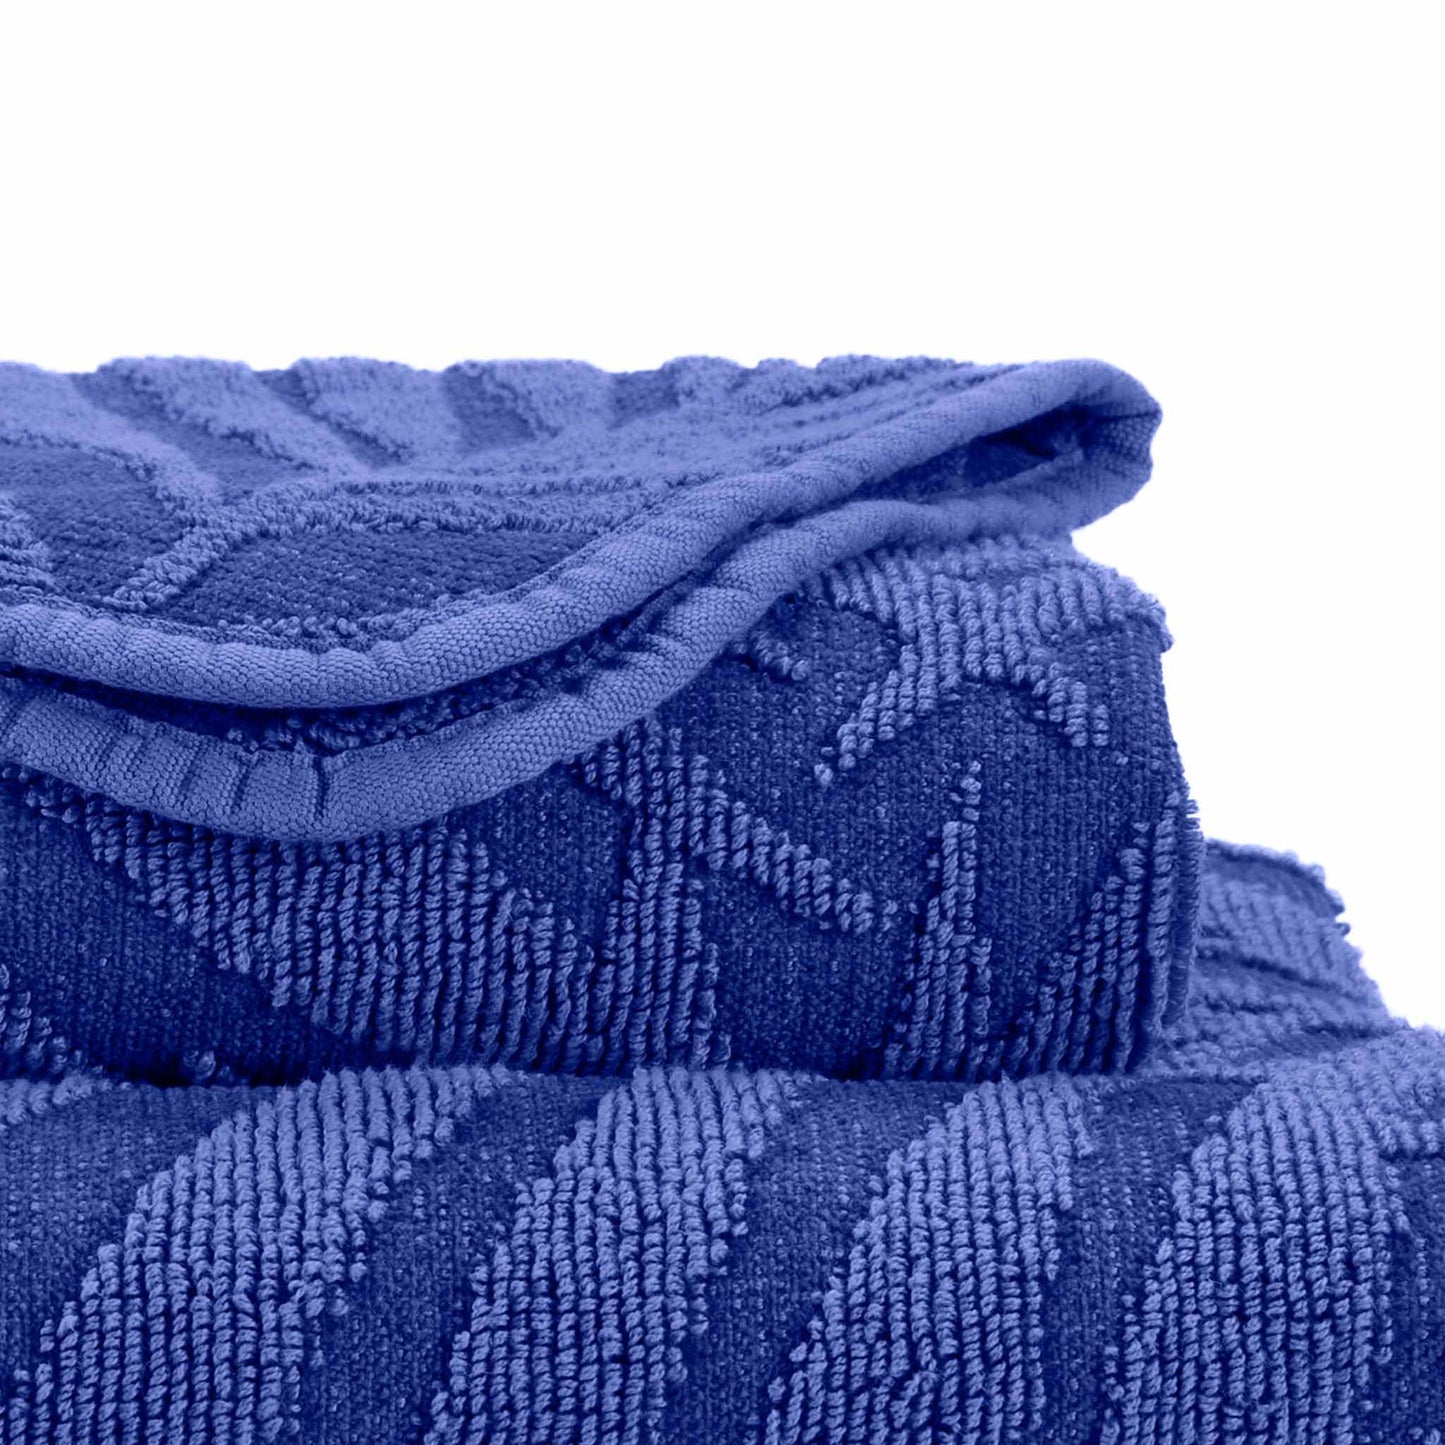 FIDJI Blue Egyptian Cotton Palm Leaf Towels / 335 Indigo - |VESIMI Design| Luxury and Rustic bathrooms online